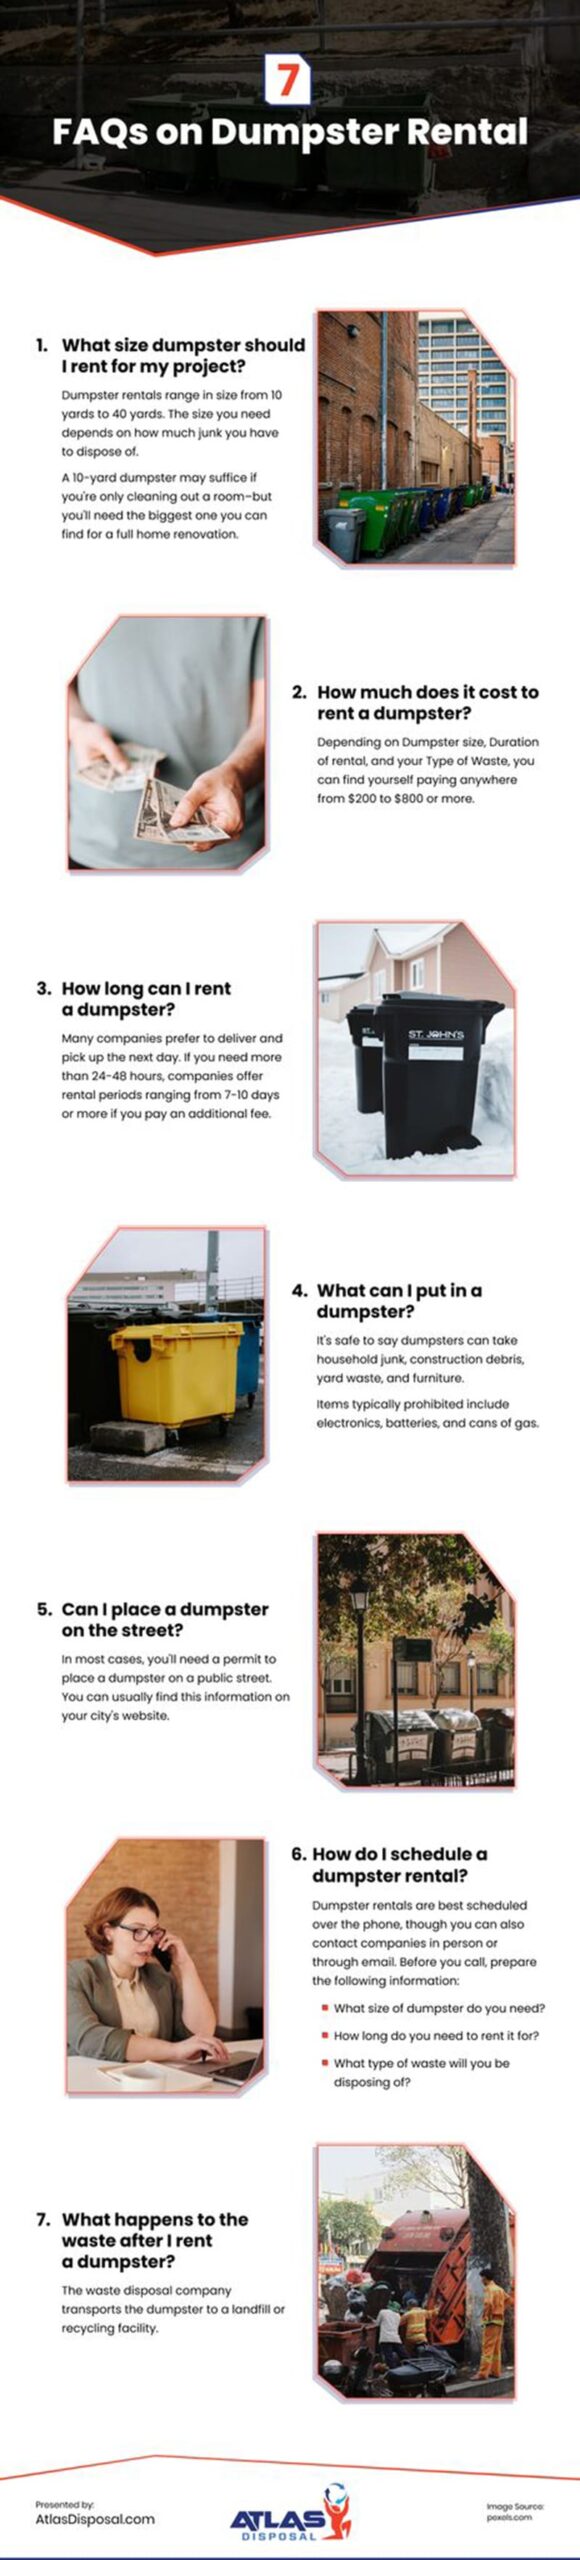 FAQs on Dumpster Rental Infographic